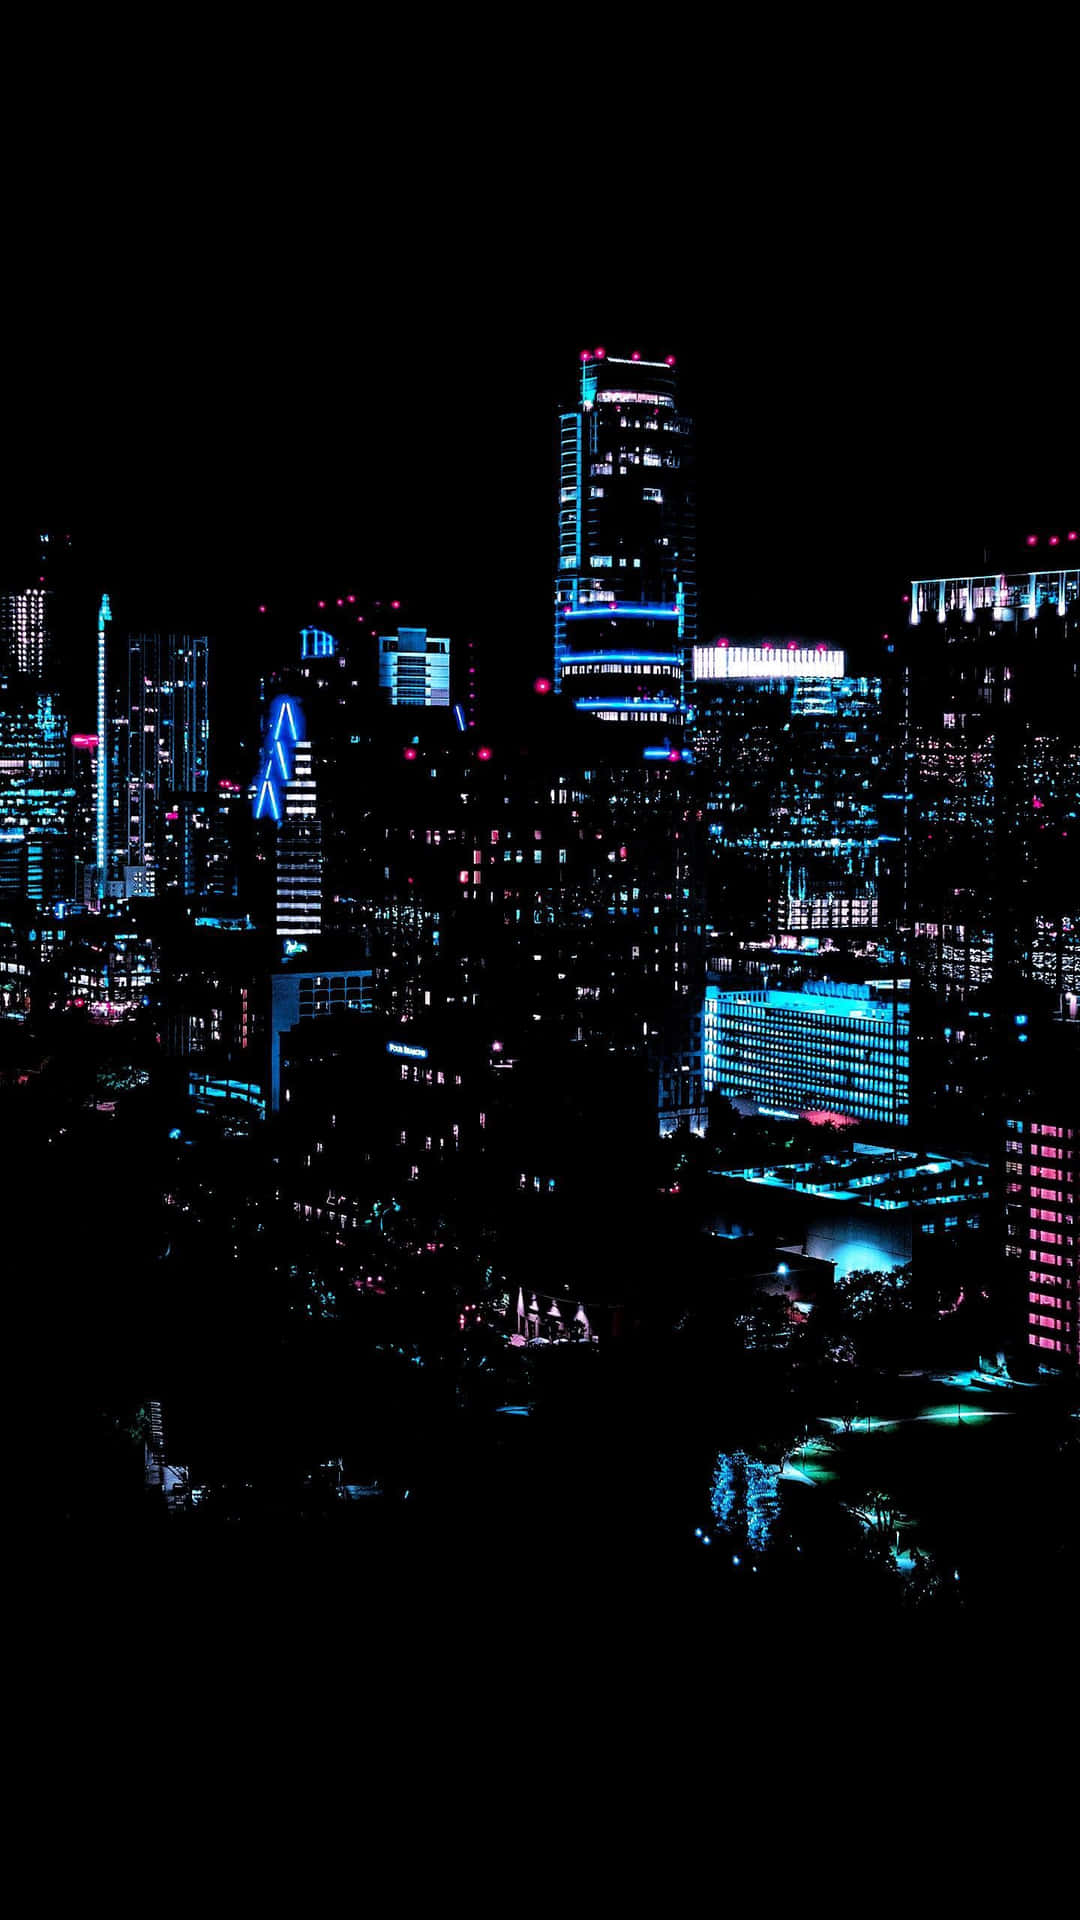 Explore the vibrant, illuminated streets of Neon City